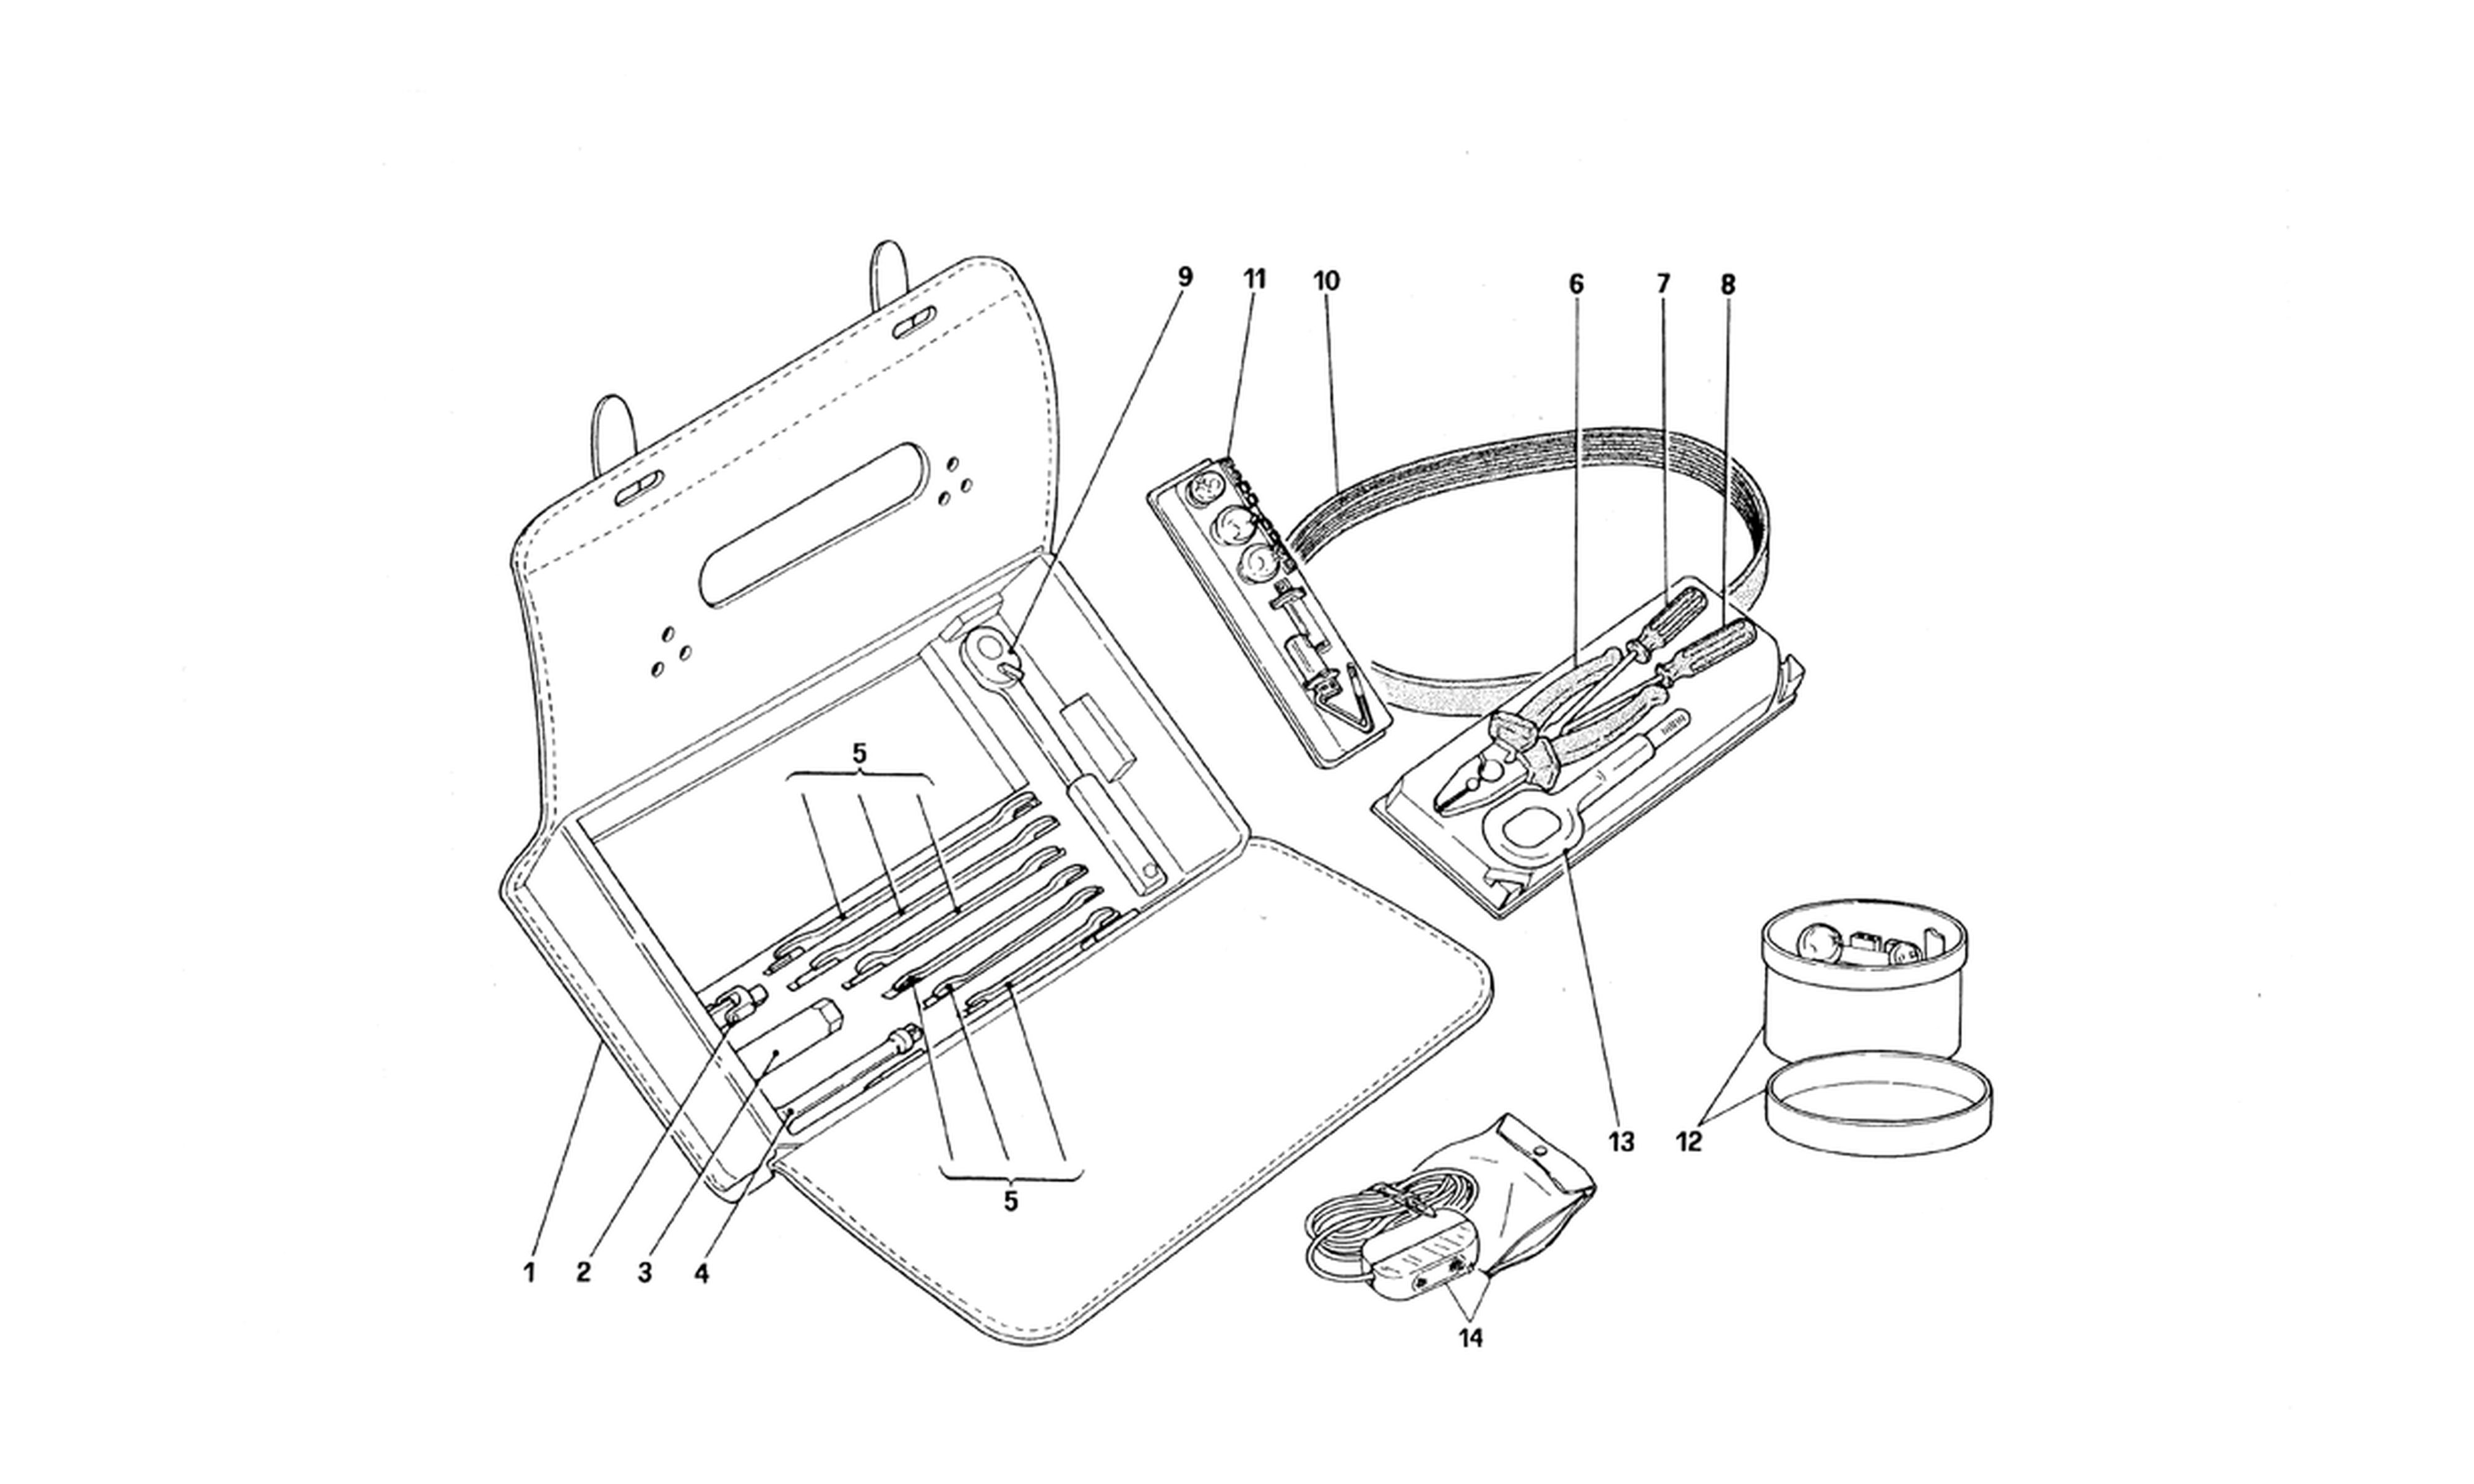 Schematic: Equipment - Horizontal Bag